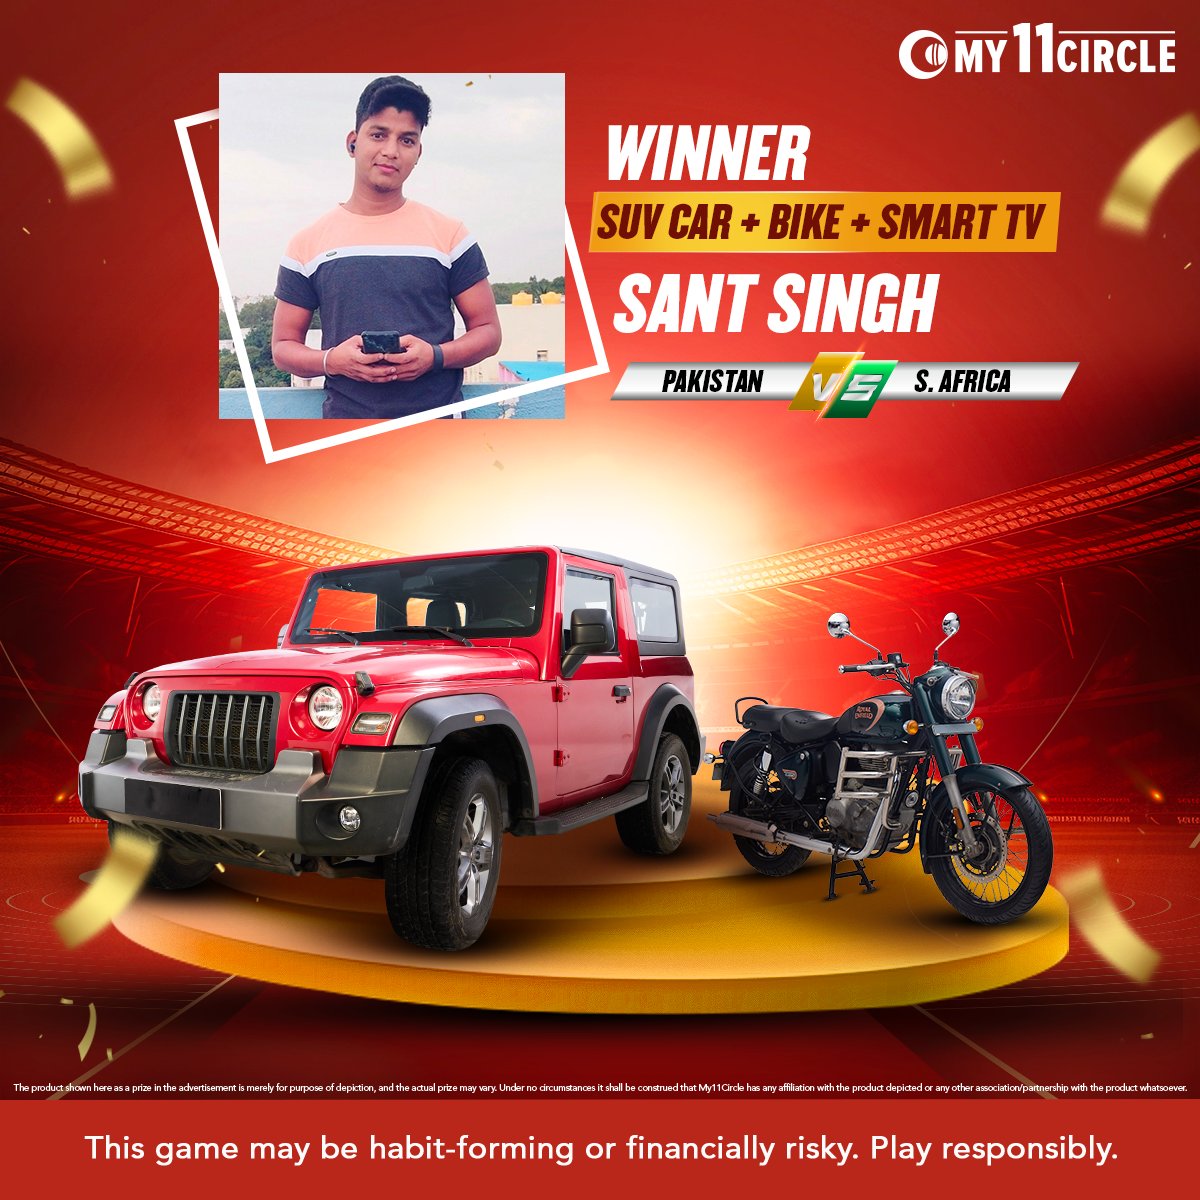 Triple delight! Congratulations Sant Singh on being the proud owner of a stylish SUV, a stunning bike, and a smart TV. 

#PAKvsSA #HarDinNaya #HarDinBada

bit.ly/36Ekaf8